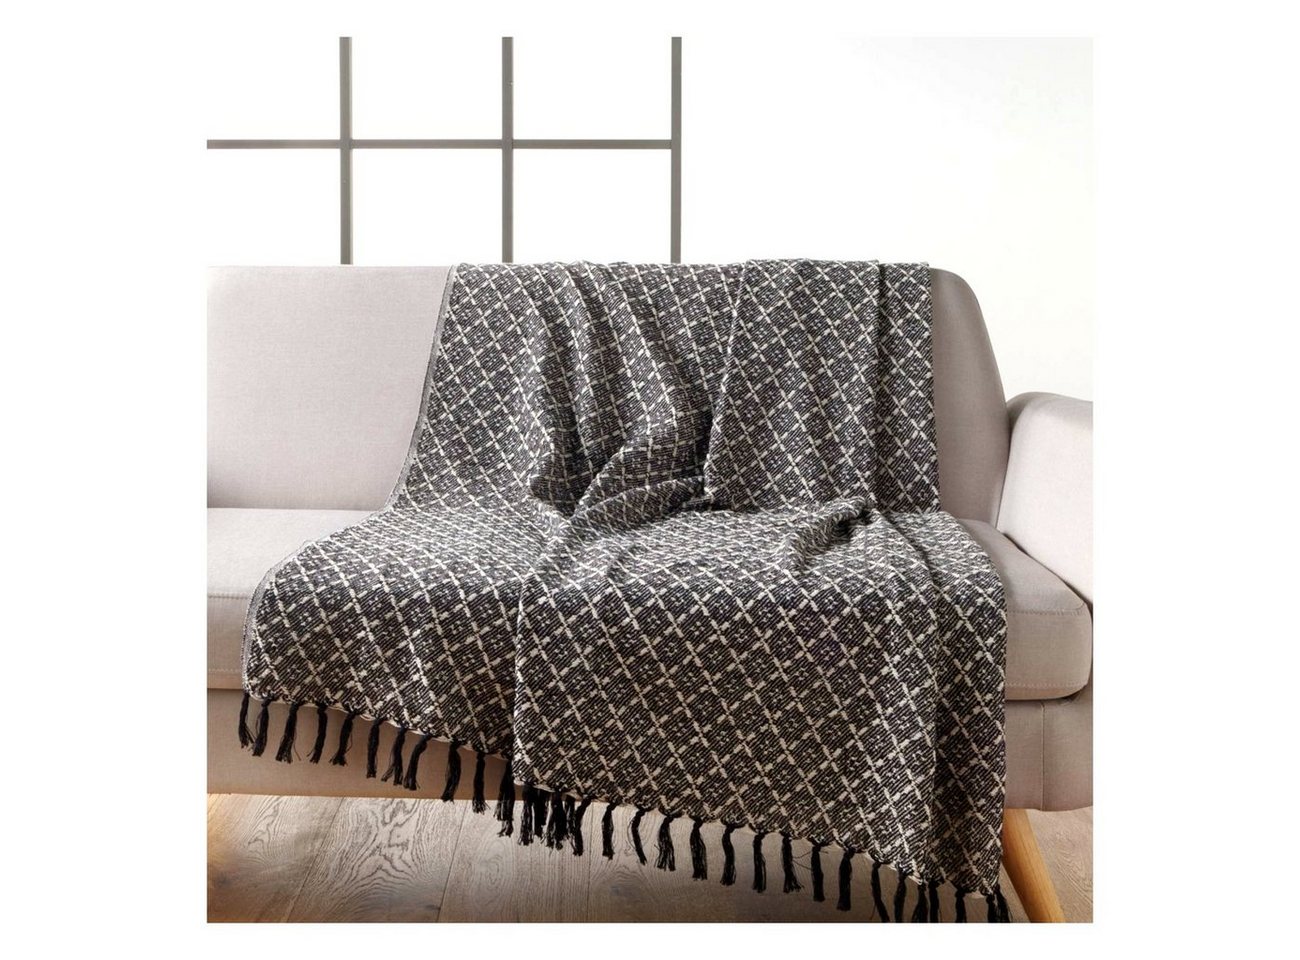 Plaid Fransen-Decke 150x125 cm Plaid Sofadecke schwarz weiß Baumwolle, Macosa Home, Designdecke Wolldecke Reisedecke von Macosa Home